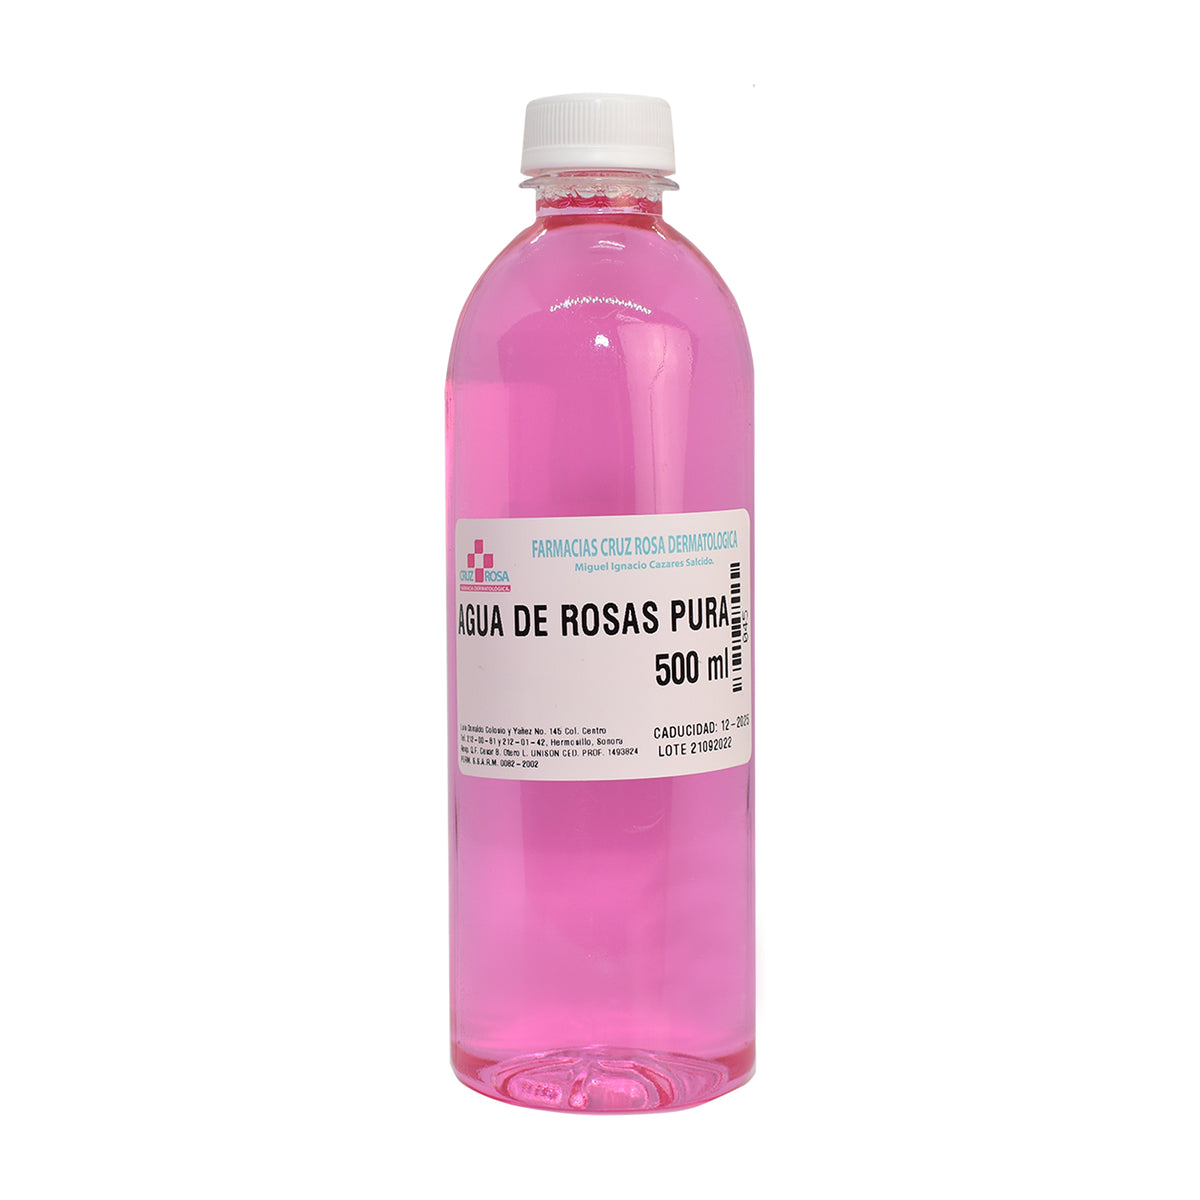 AGUA DE ROSAS 500ML - FARMACIA CRUZ ROSA, Farmacia Dermatológica Cruz Rosa, Cuidado de la piel